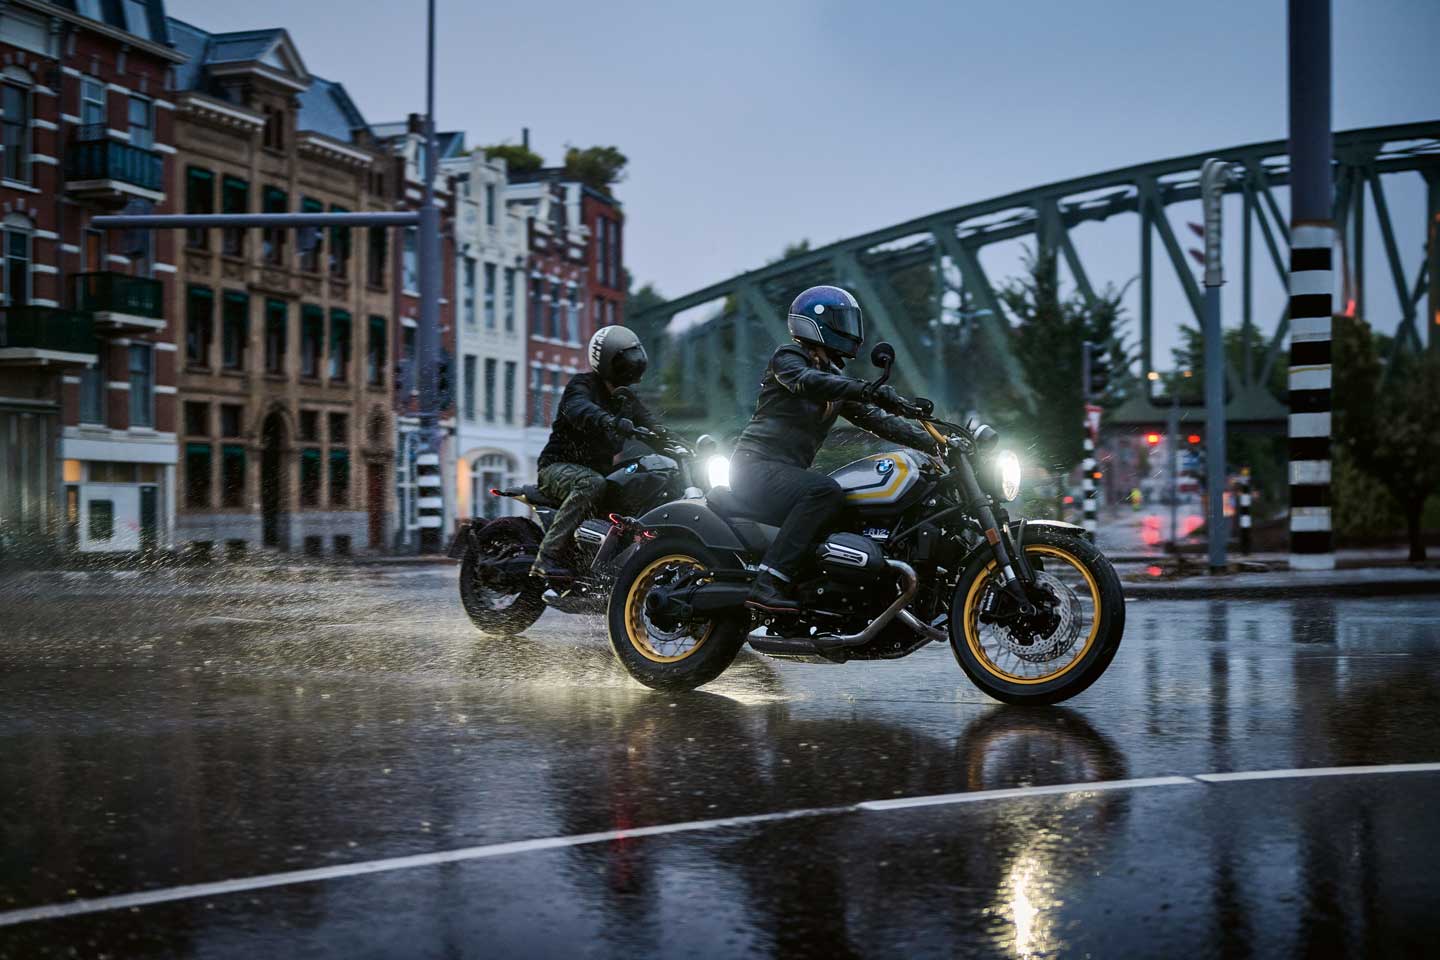 BMW Motorrad teases new R12 nineT motorcycle as successor to R